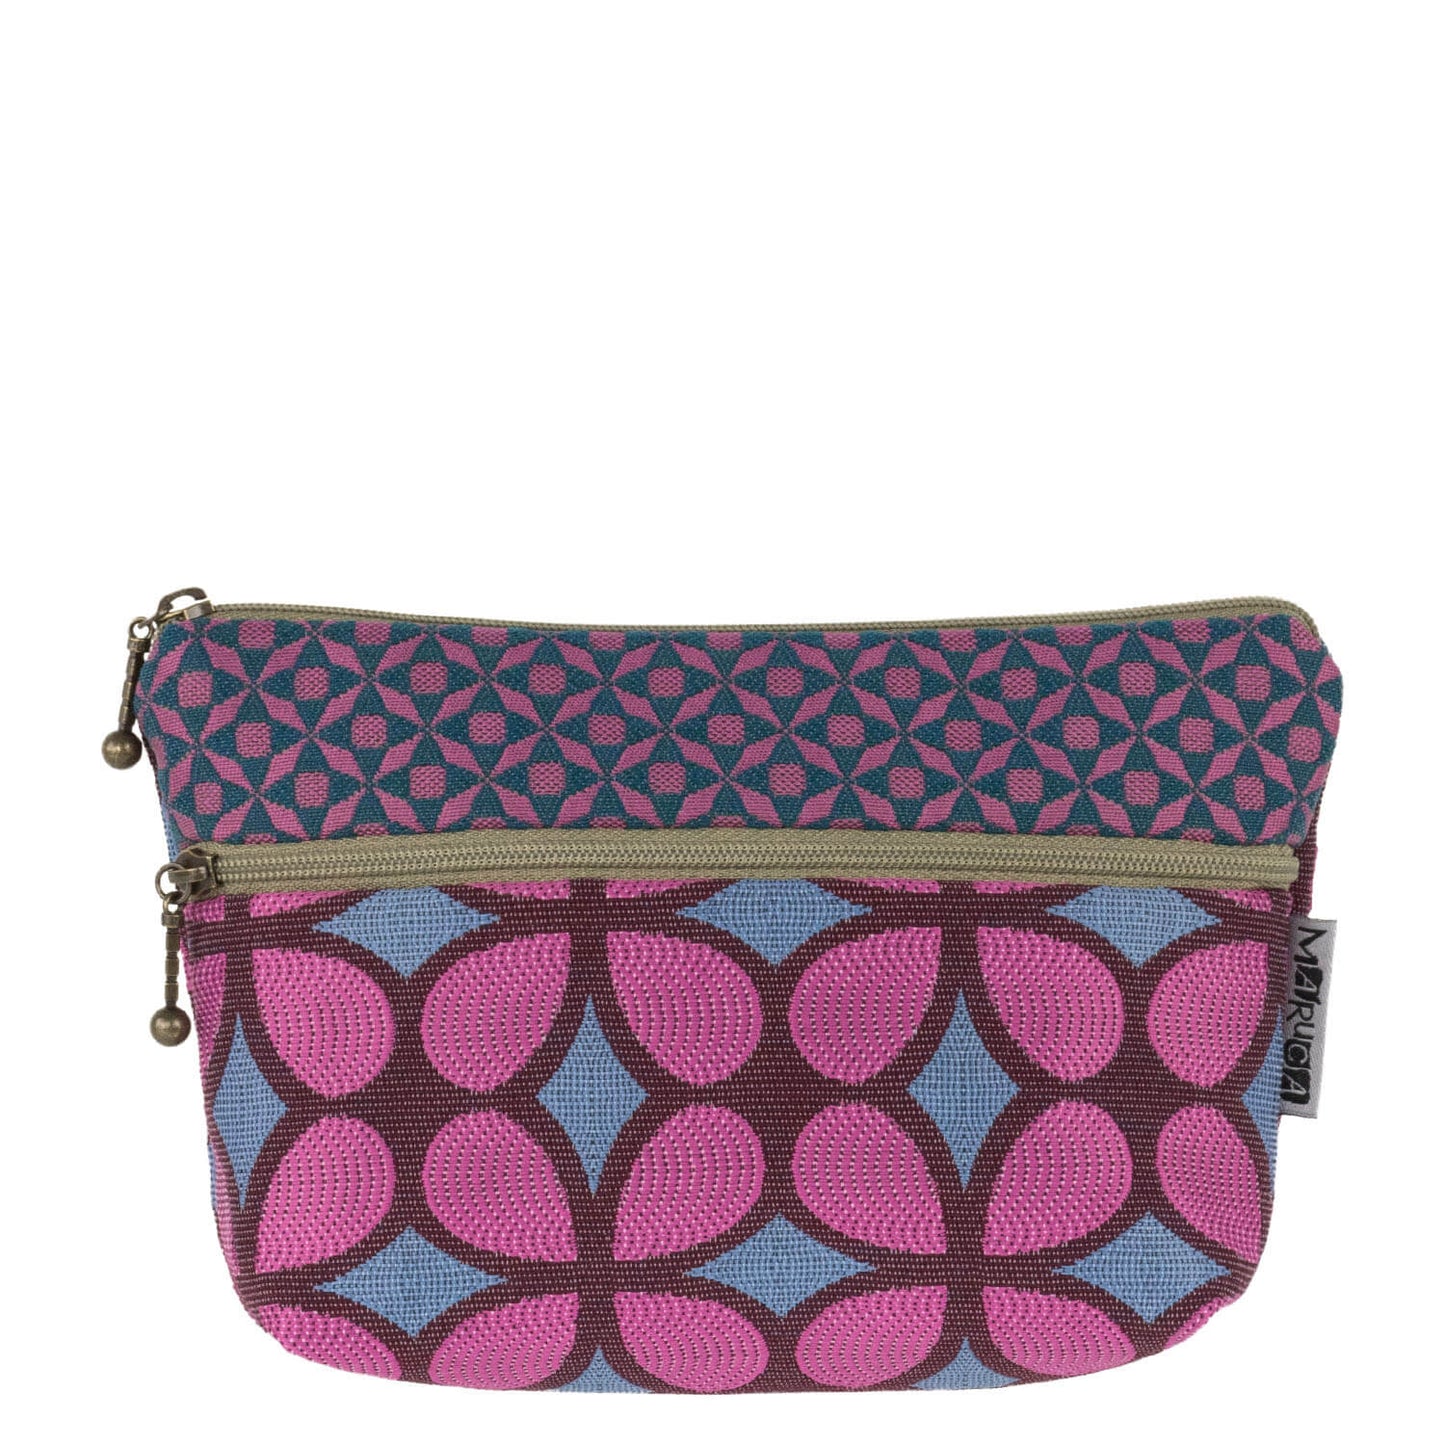 Cosmetic Bag in Mod Fuchsia by Maruca Design